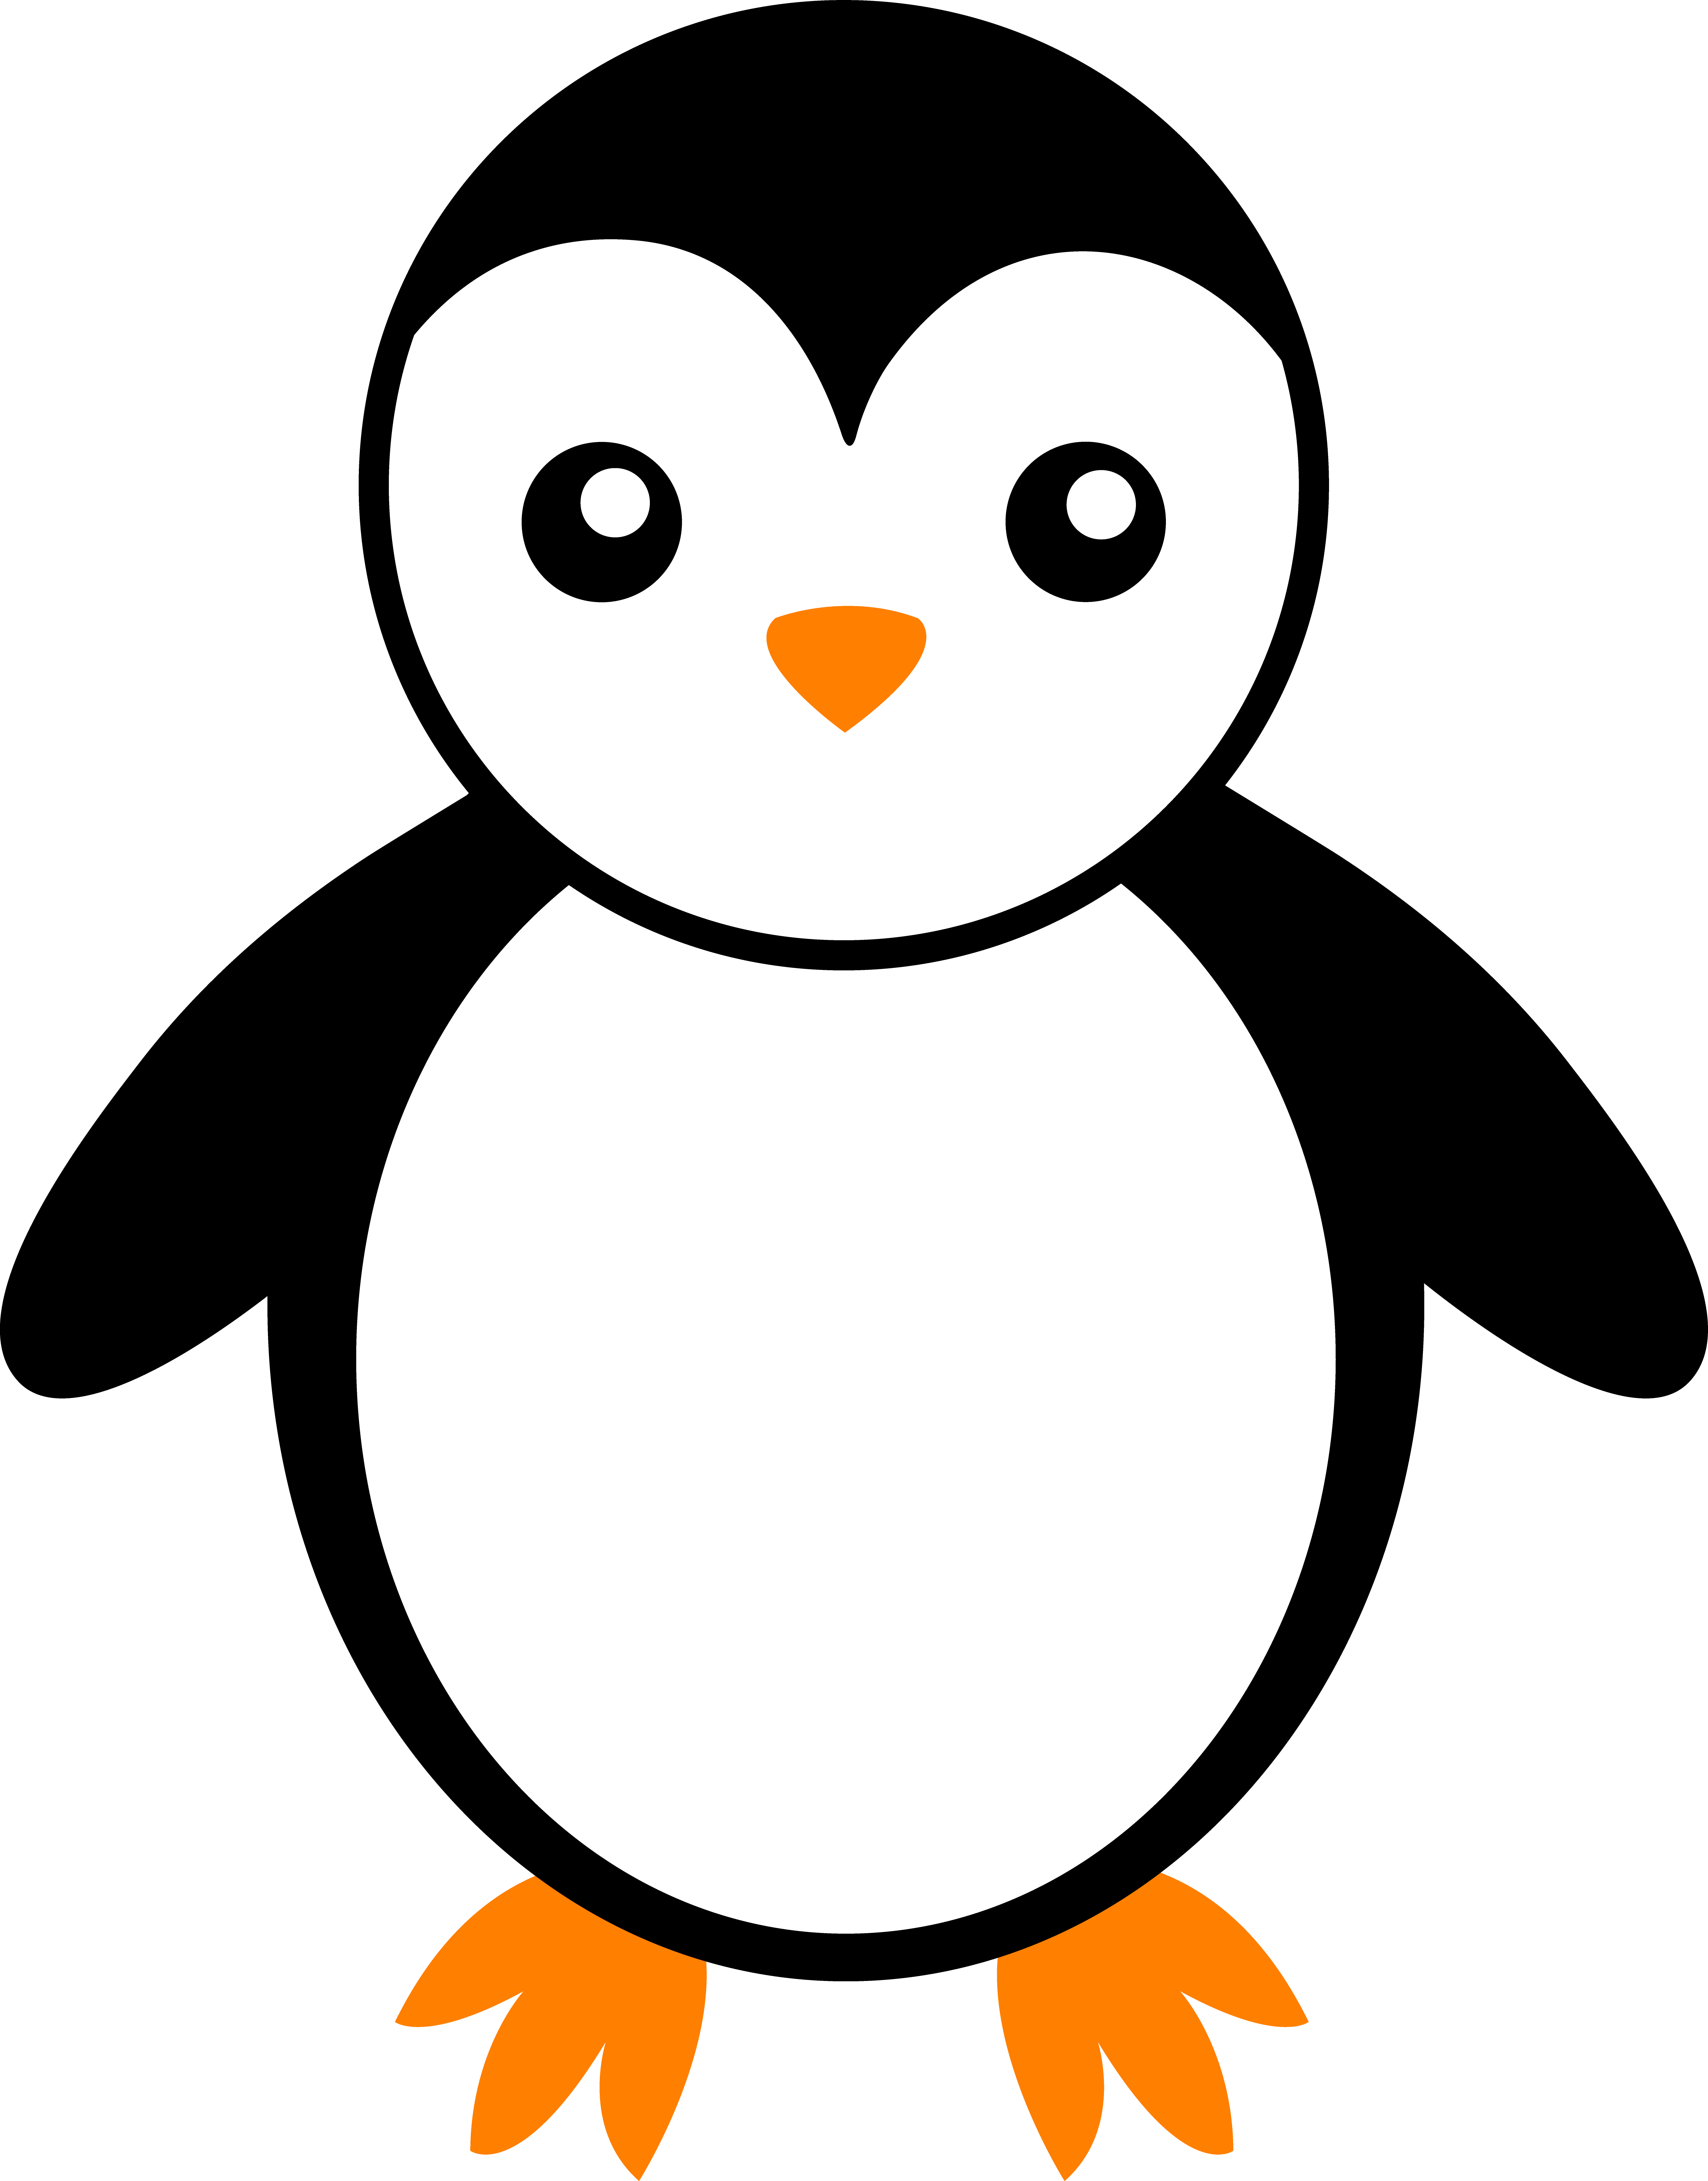 Cartoon penguin clipart - ClipartFox